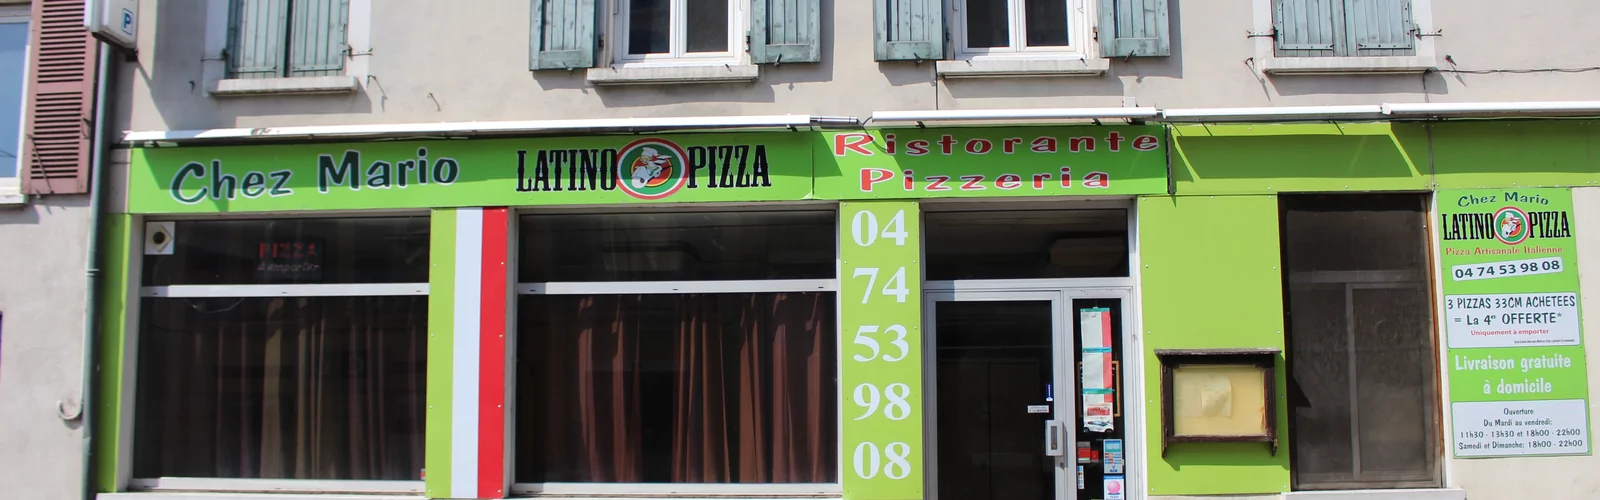 Latino Pizza "Chez Mario"